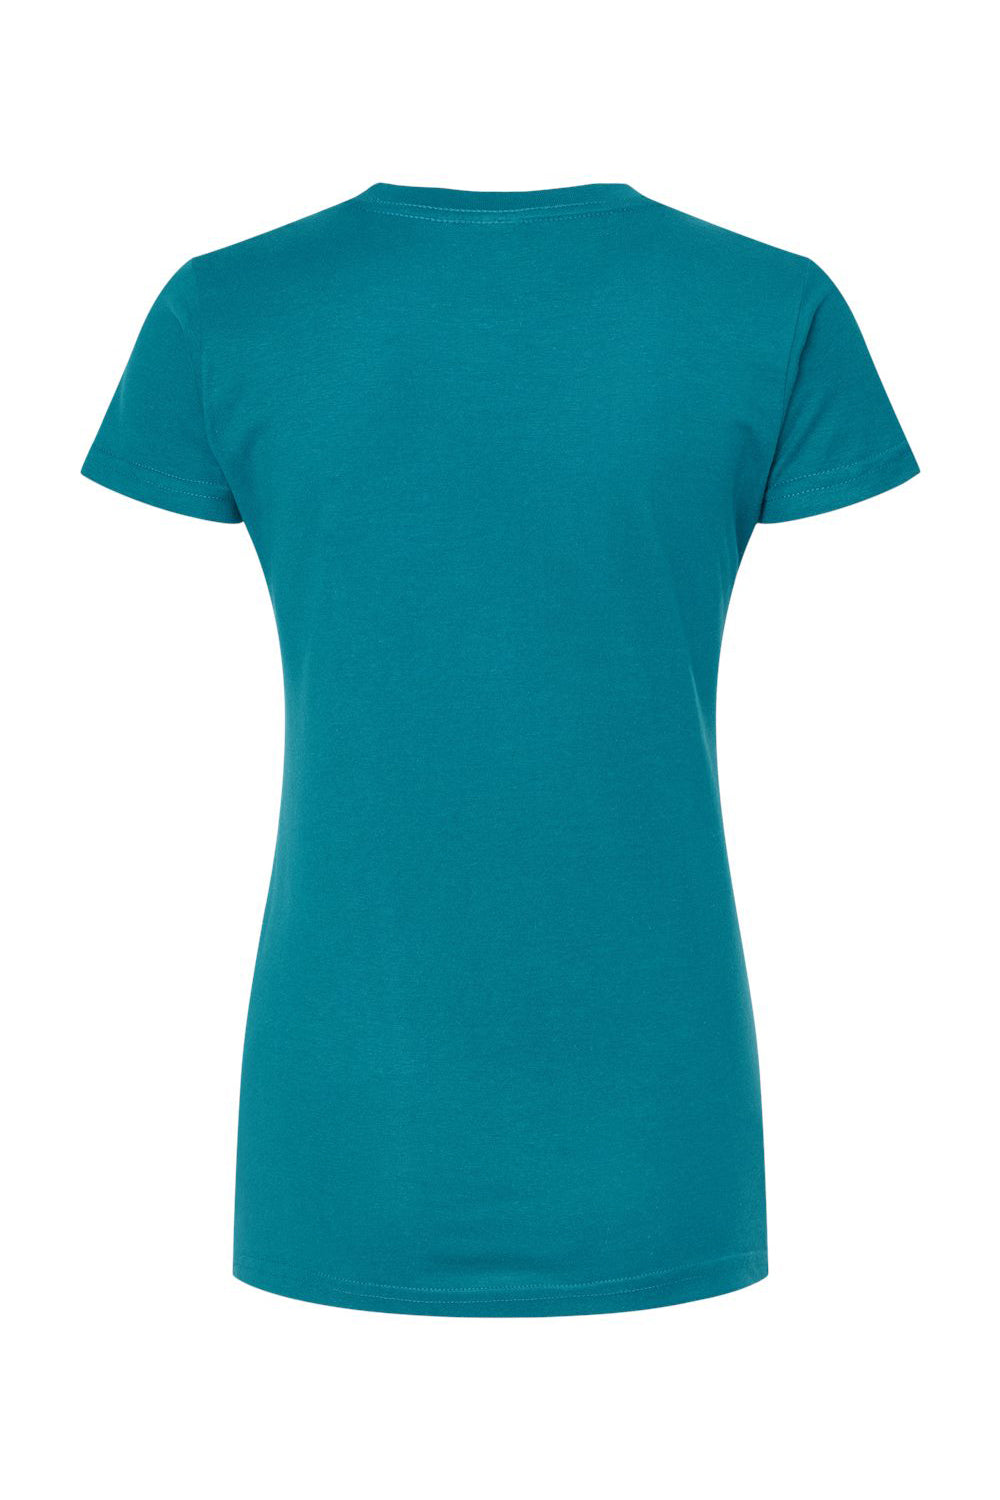 Tultex 213 Womens Fine Jersey Slim Fit Short Sleeve Crewneck T-Shirt Teal Blue Flat Back